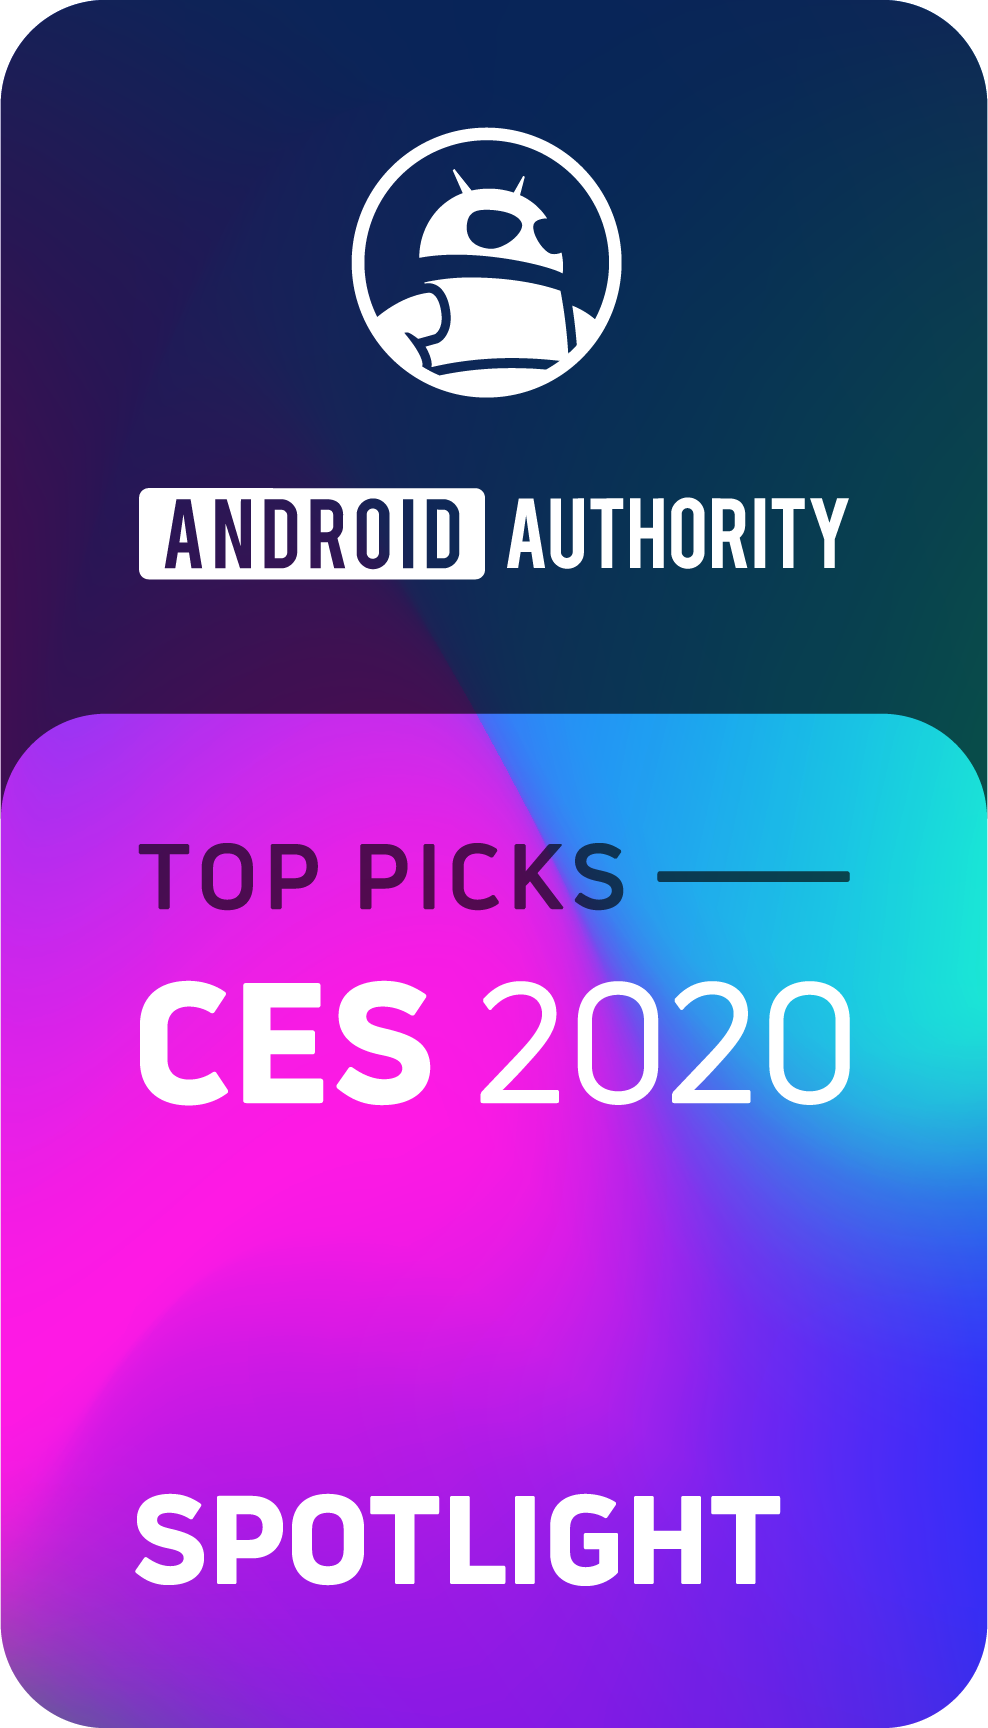 bob体育提现bob哪个彩靠谱Android Authority CES CES 2020 Spotlight avarte徽章